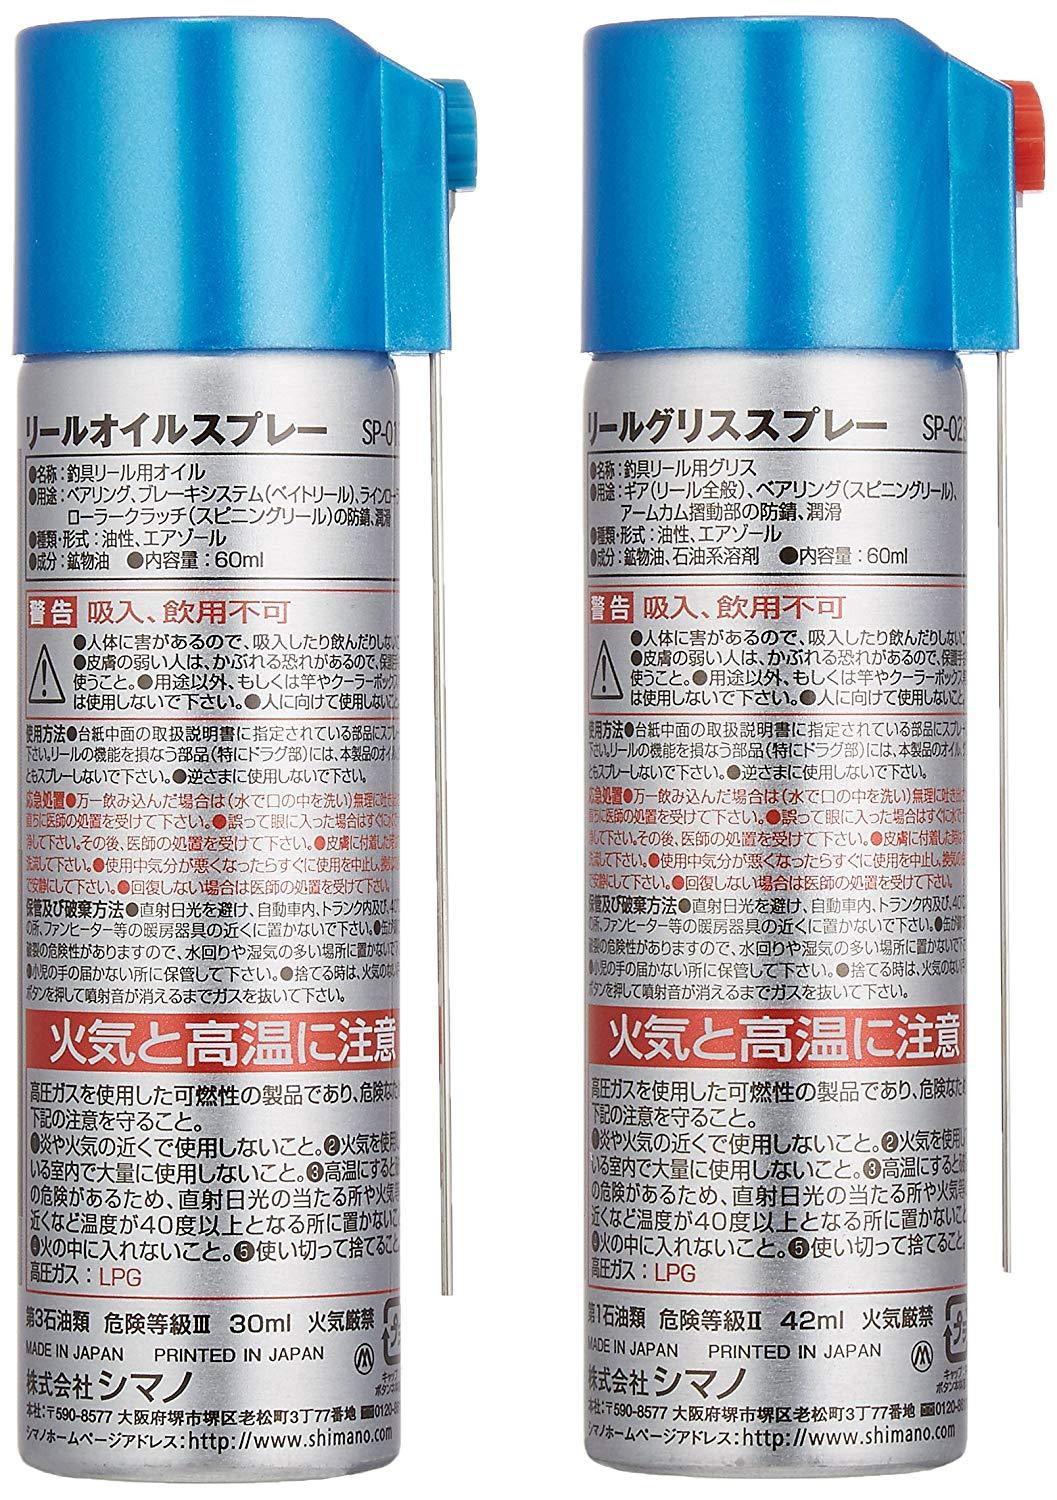 Shimano SP-003H Oil Grease Reel Maintenance Kit (890078)